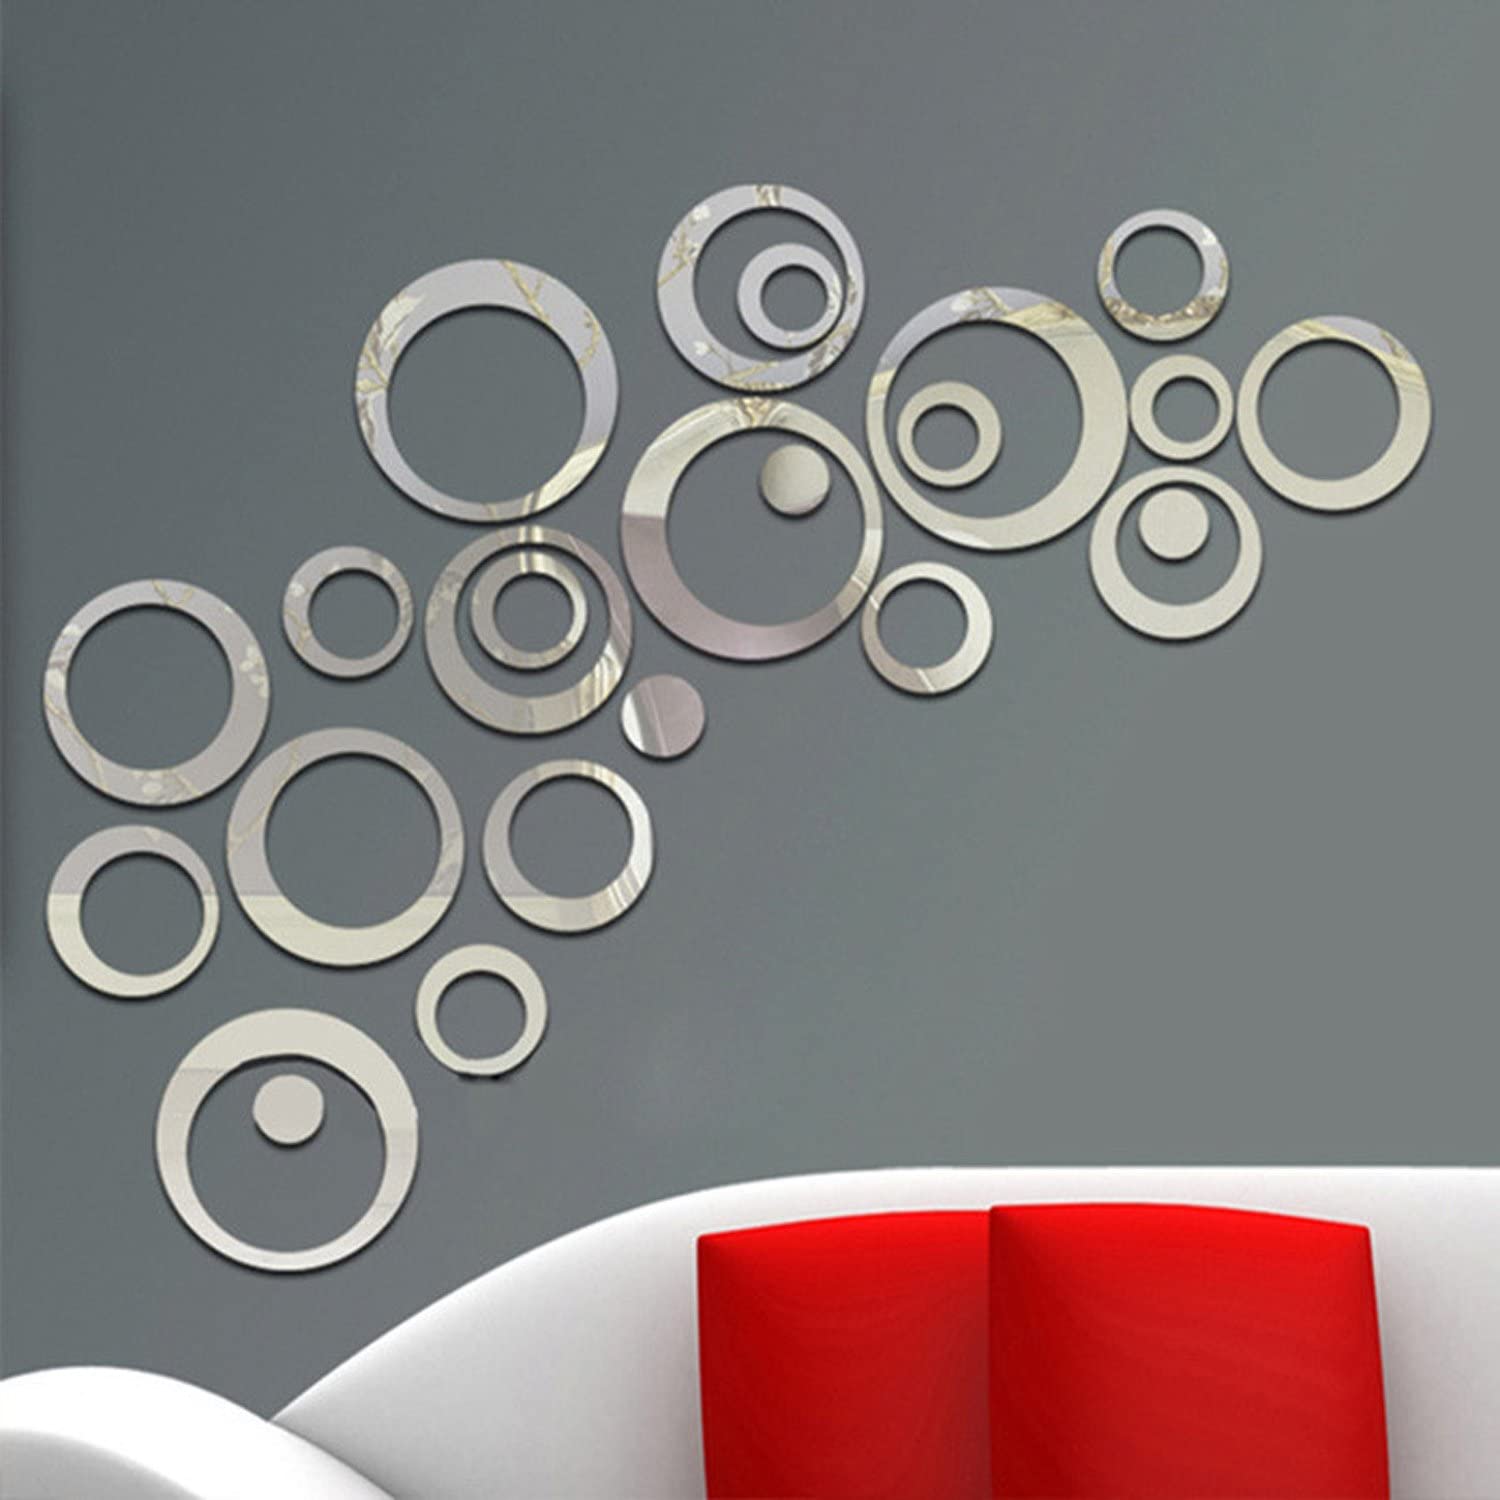 Circle Mirror DIY Wall Sticker Wall Decoration 24pcs Silver/Grey